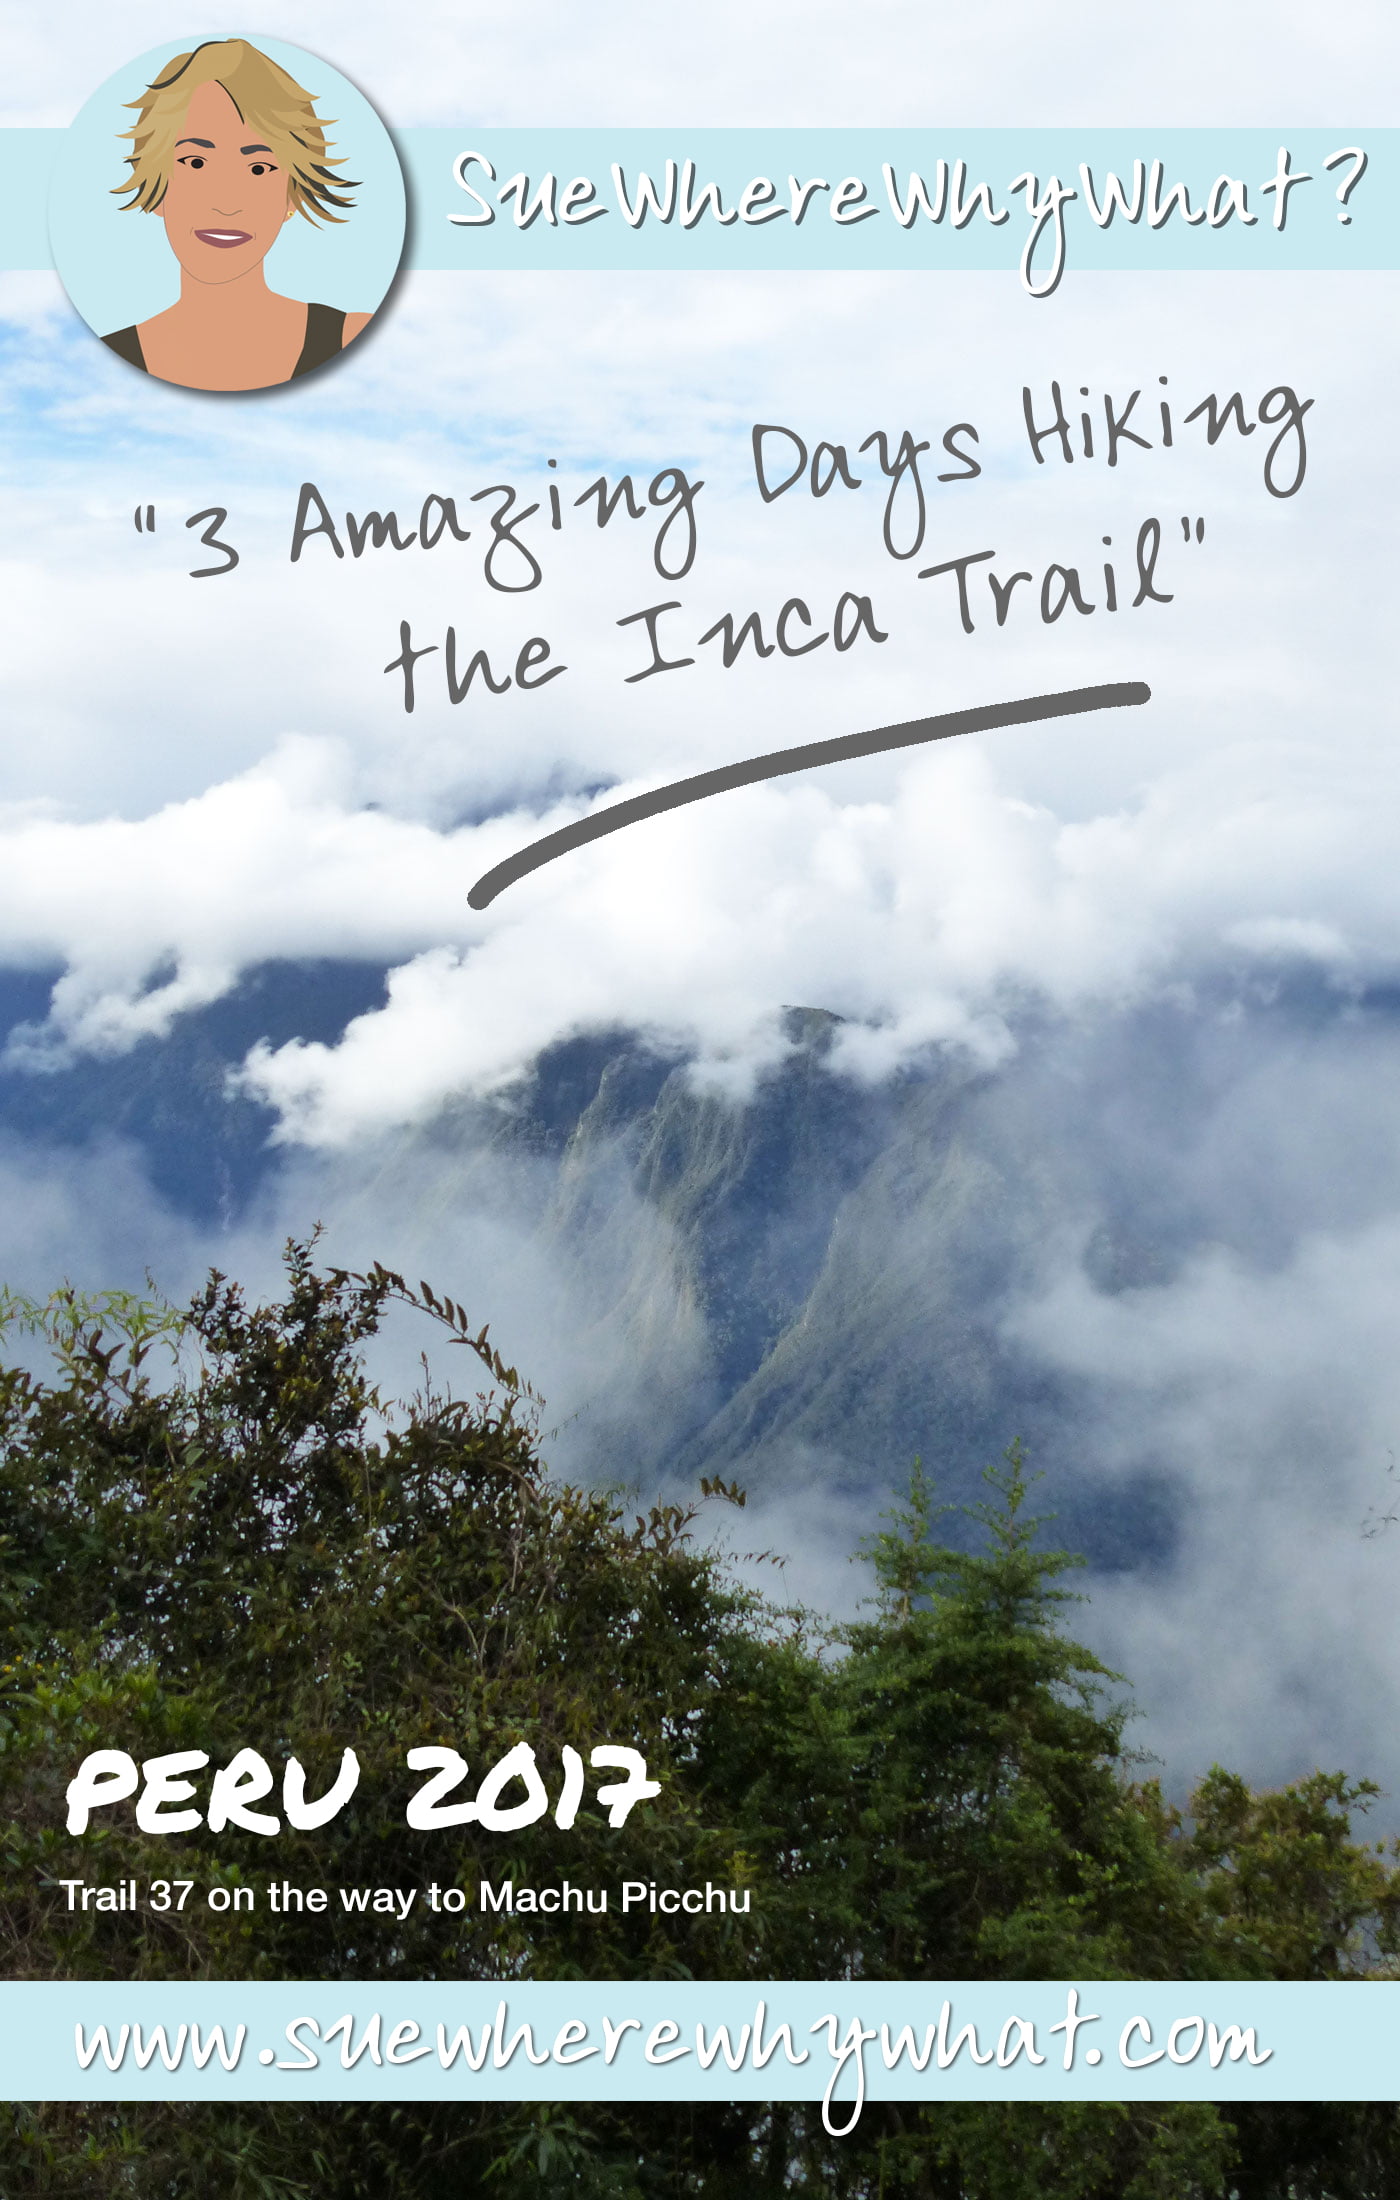 3 Amazing Days Hiking the Inca Trail